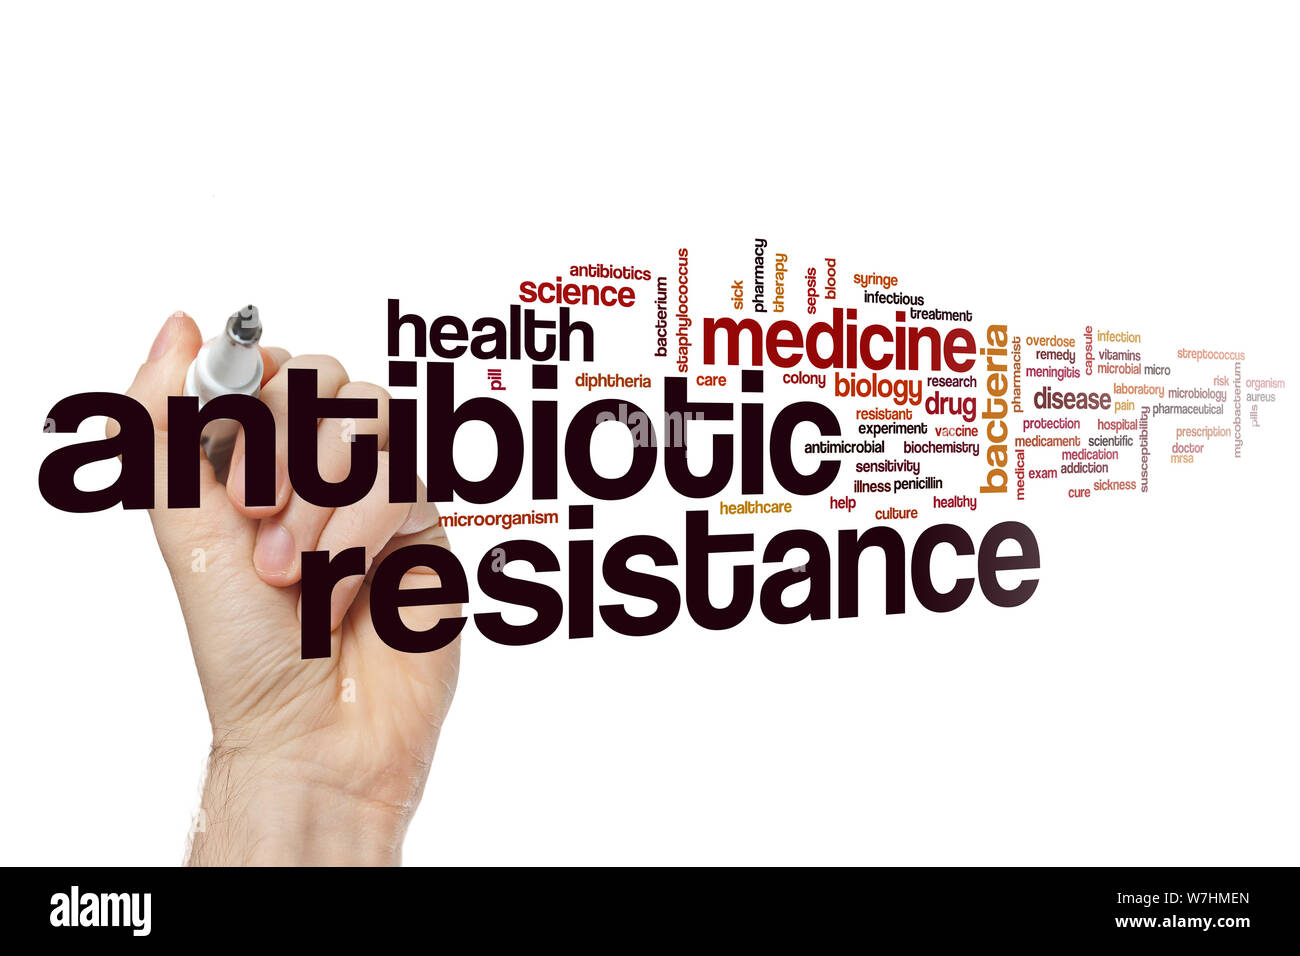 Antibiotic resistance word cloud concept Stock Photo